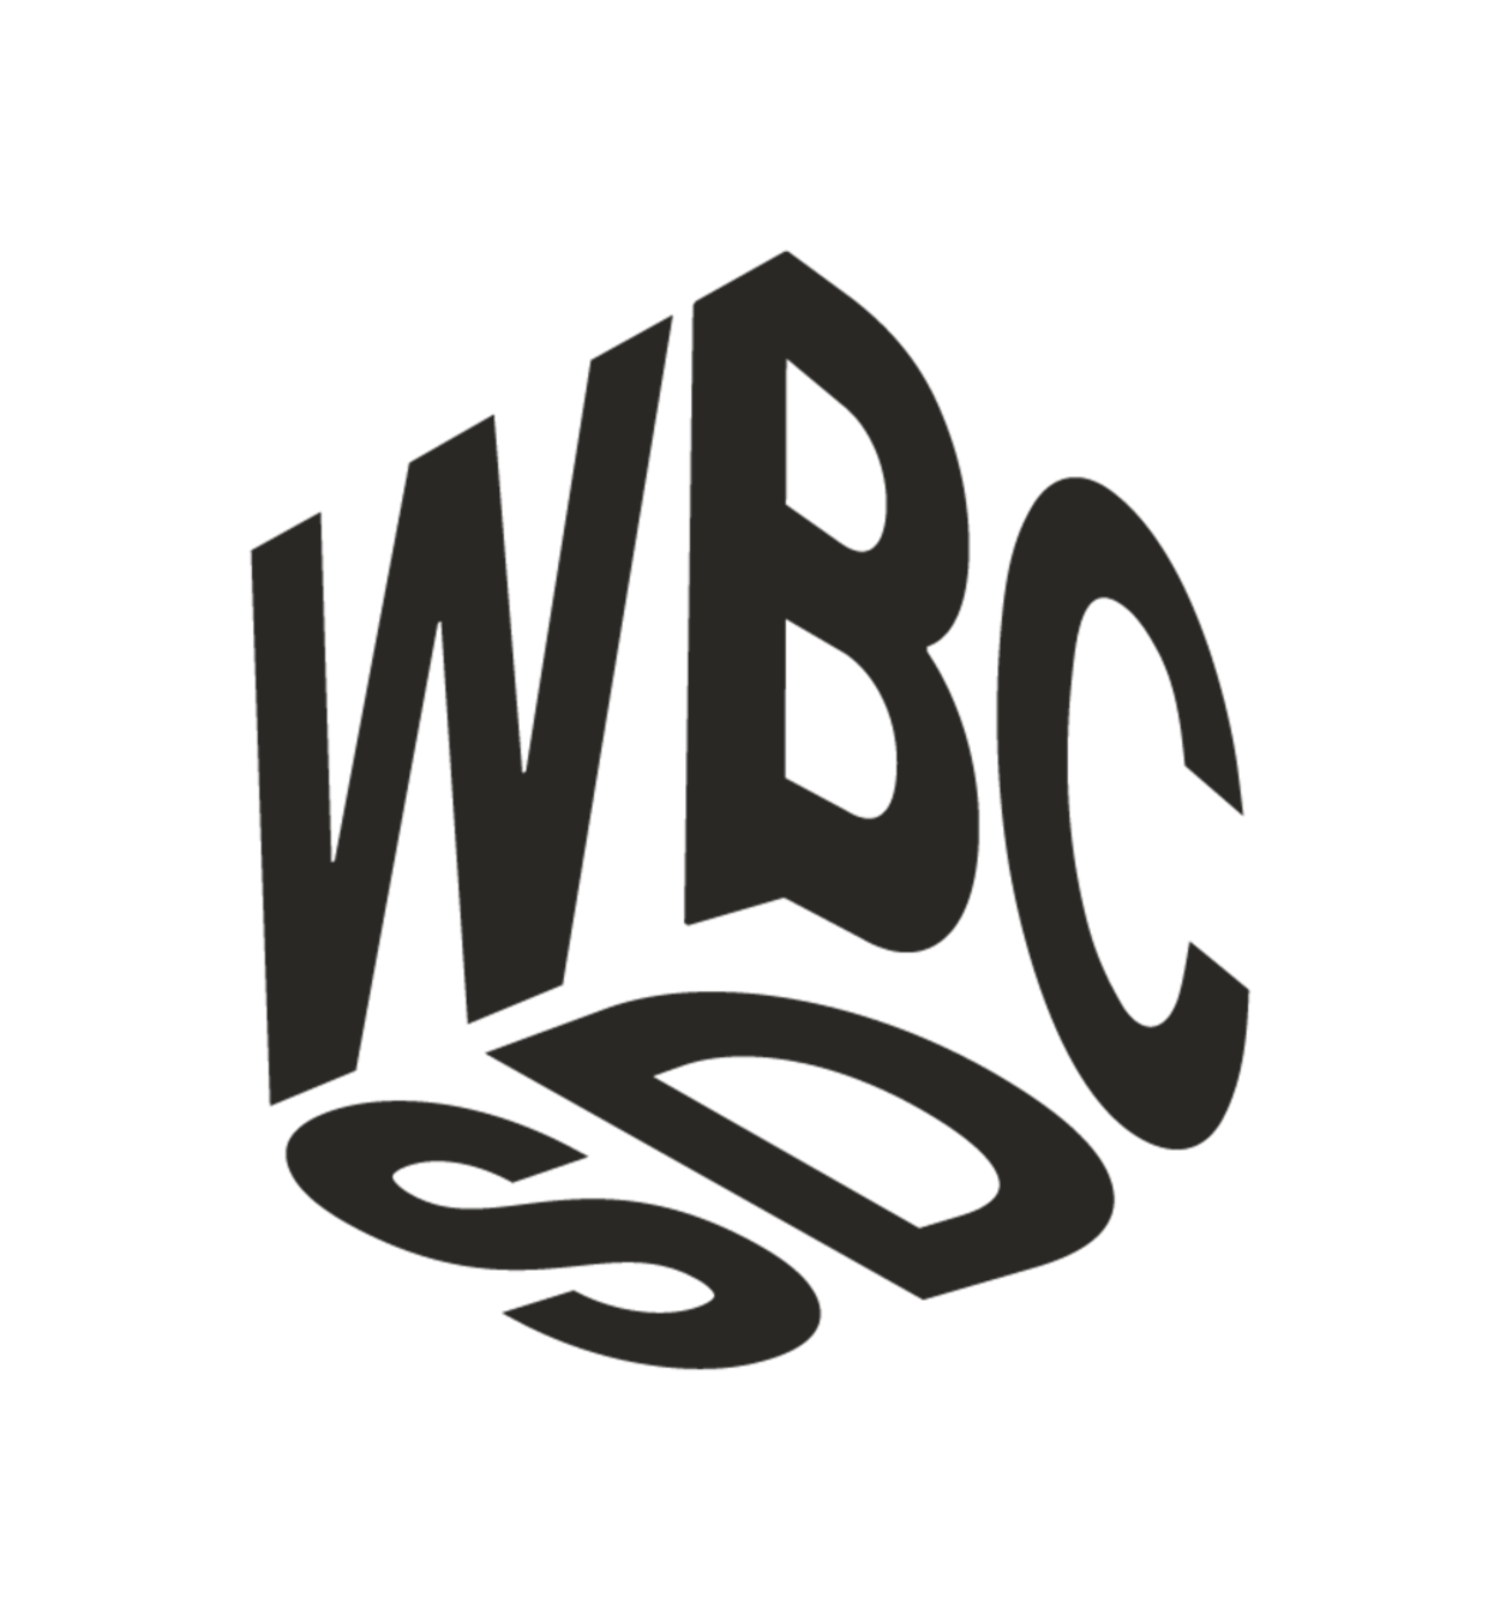 WBCSD